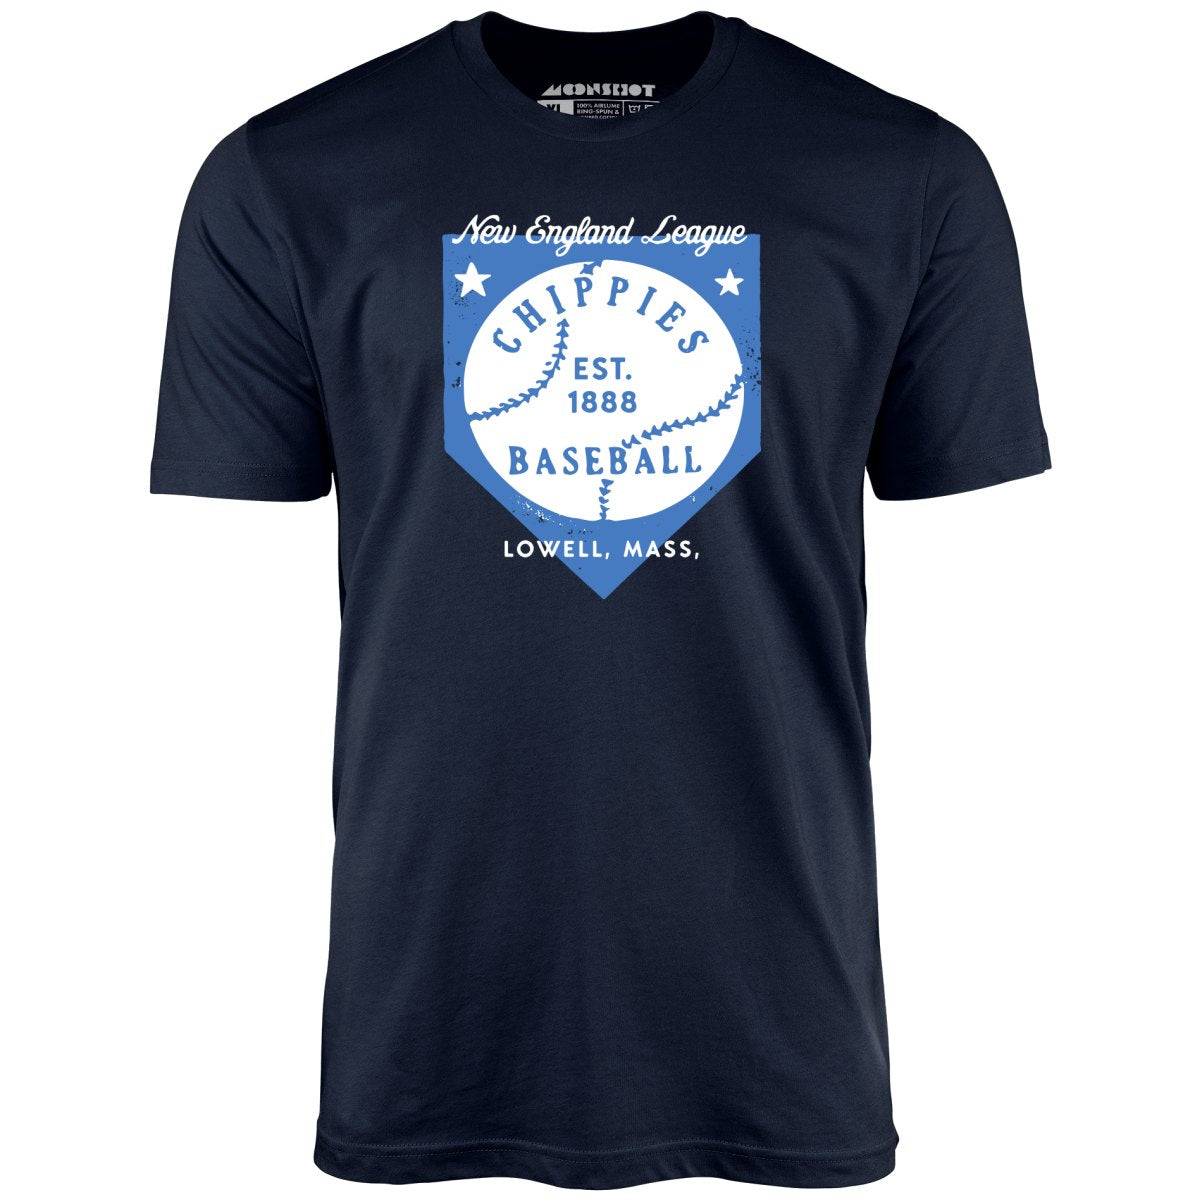 Lowell Chippies - Massachusetts - Vintage Defunct Baseball Teams - Unisex T-Shirt